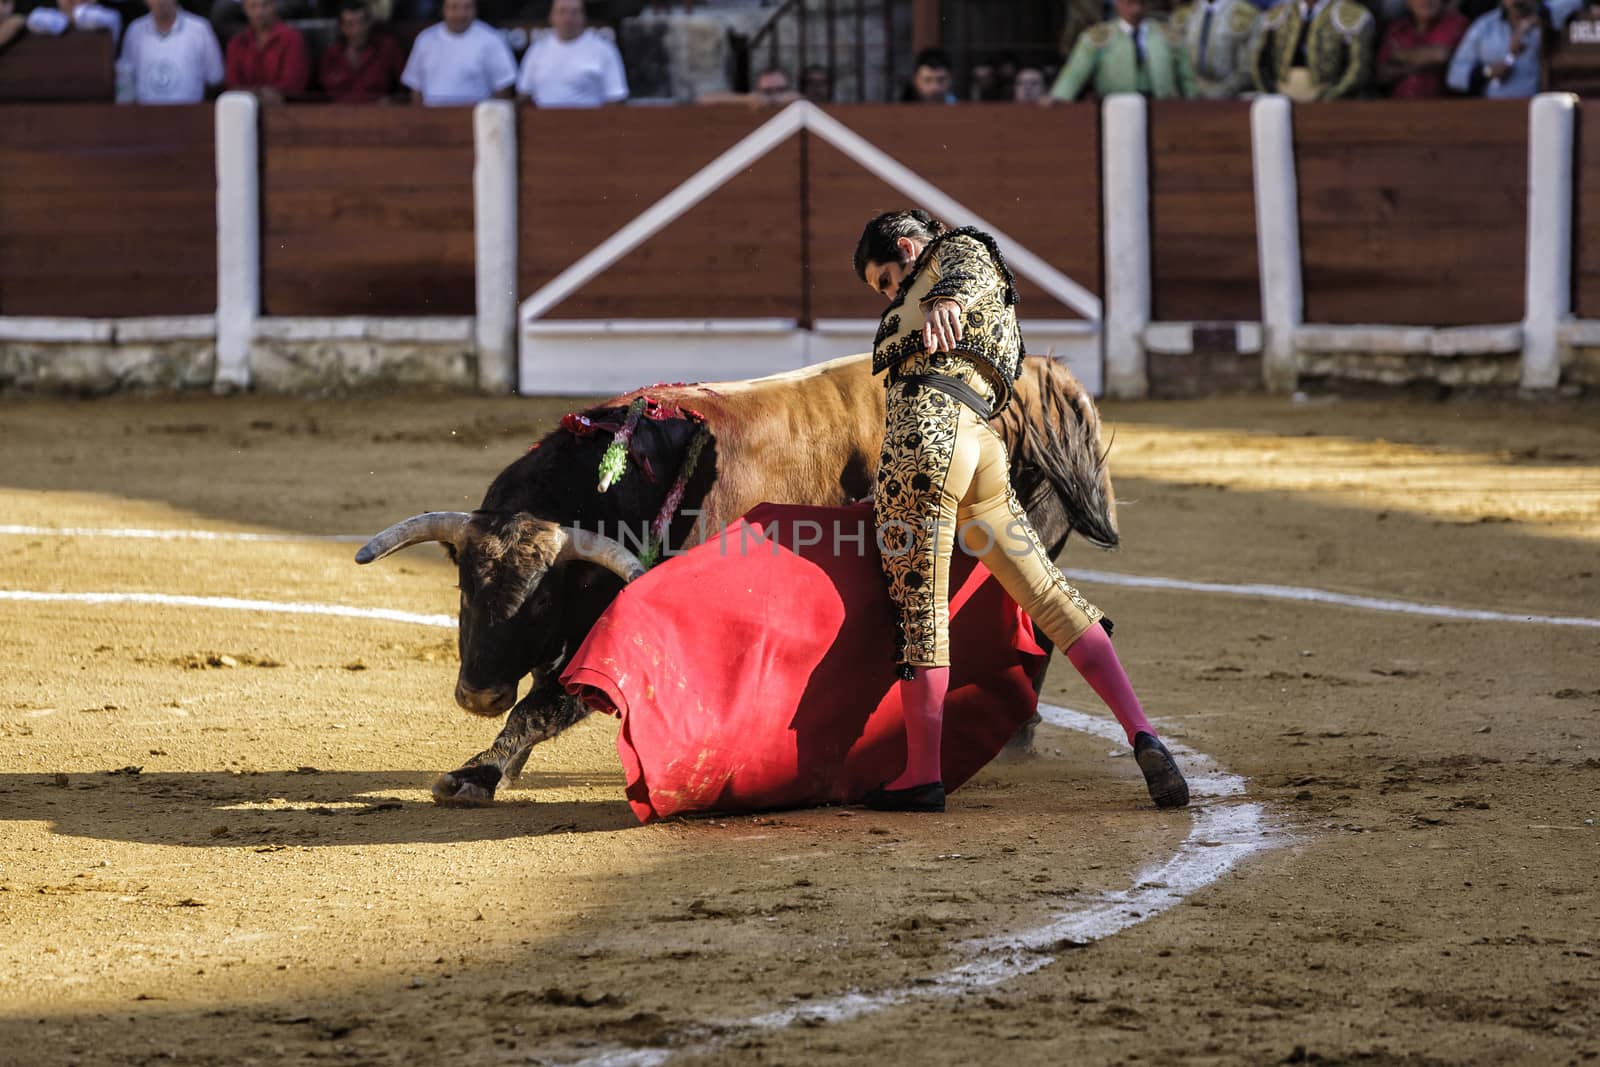 Ubeda, Jaen provincia, SPAIN , 29 september 2010:  Spanish bullfighter Morante de la Puebla bullfighting with the crutch in his first Bull of the afternoon in Ubeda bullring, Jaen, Spain, 29 September 2010